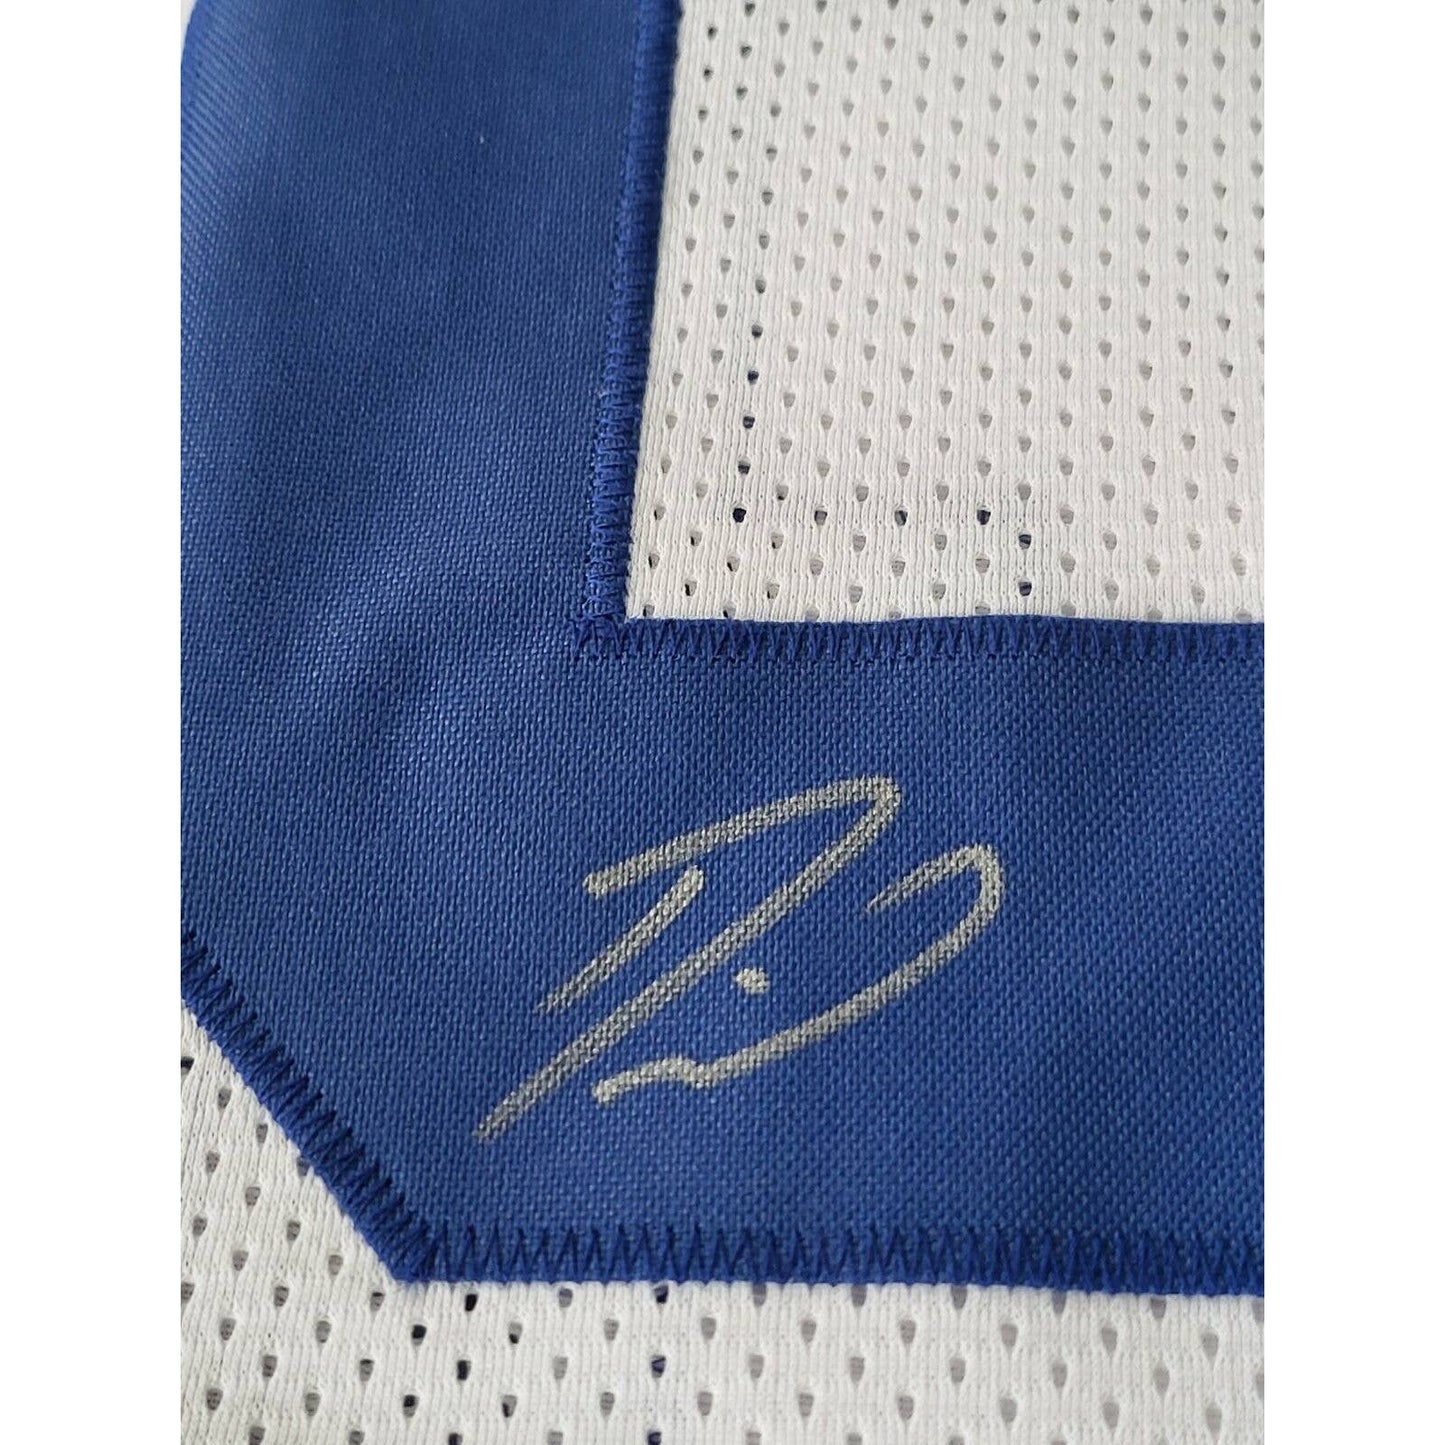 Darius Leonard Autographed/Signed Jersey JSA Sticker Indianapolis Colts - TreasuresEvolved